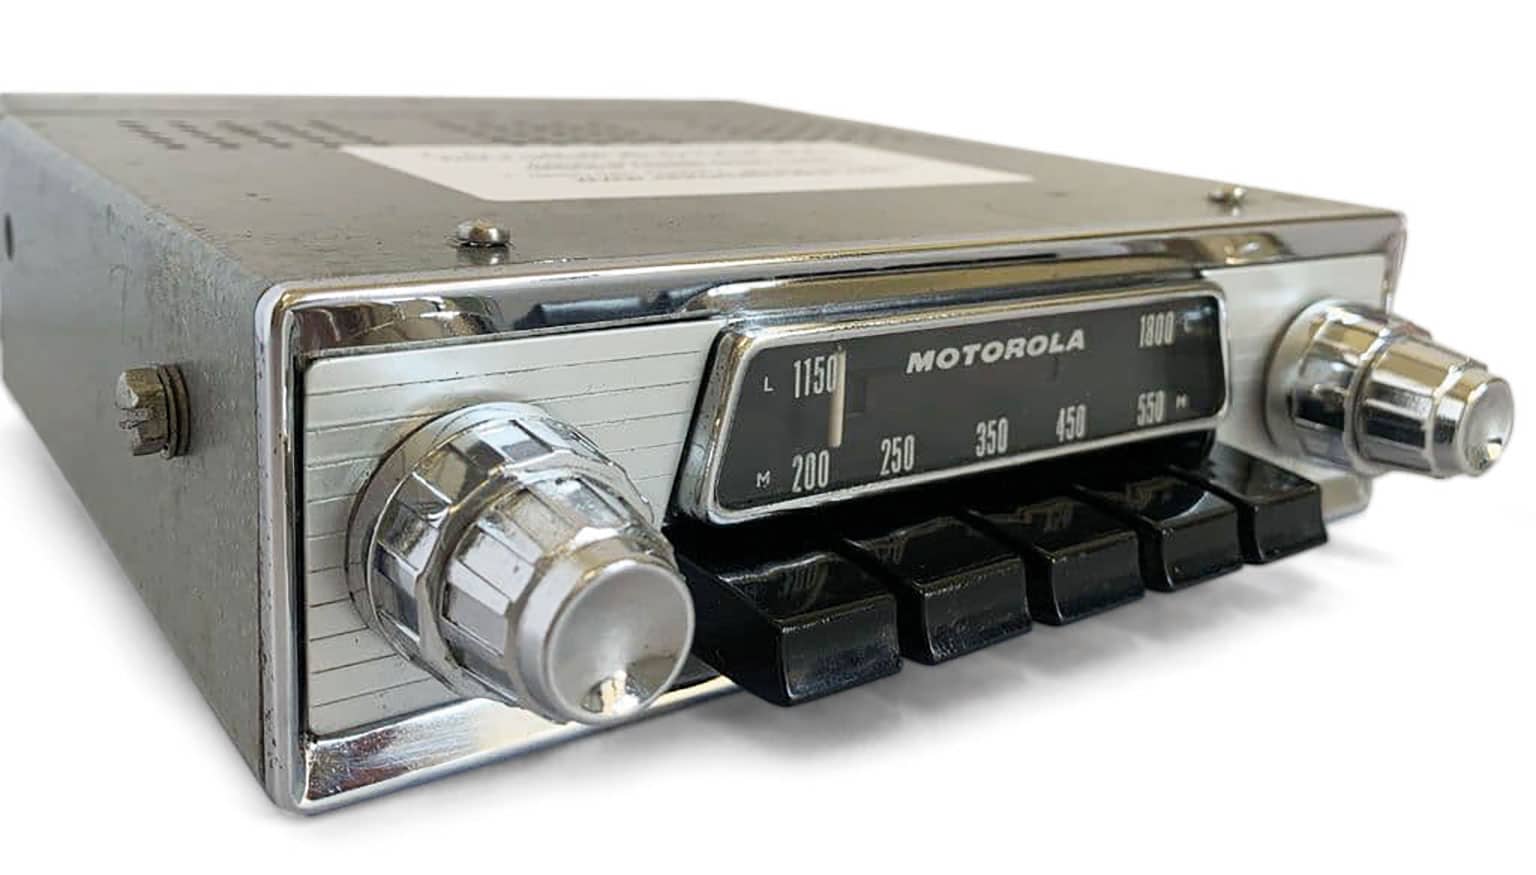 Motorola classic Jensen radio